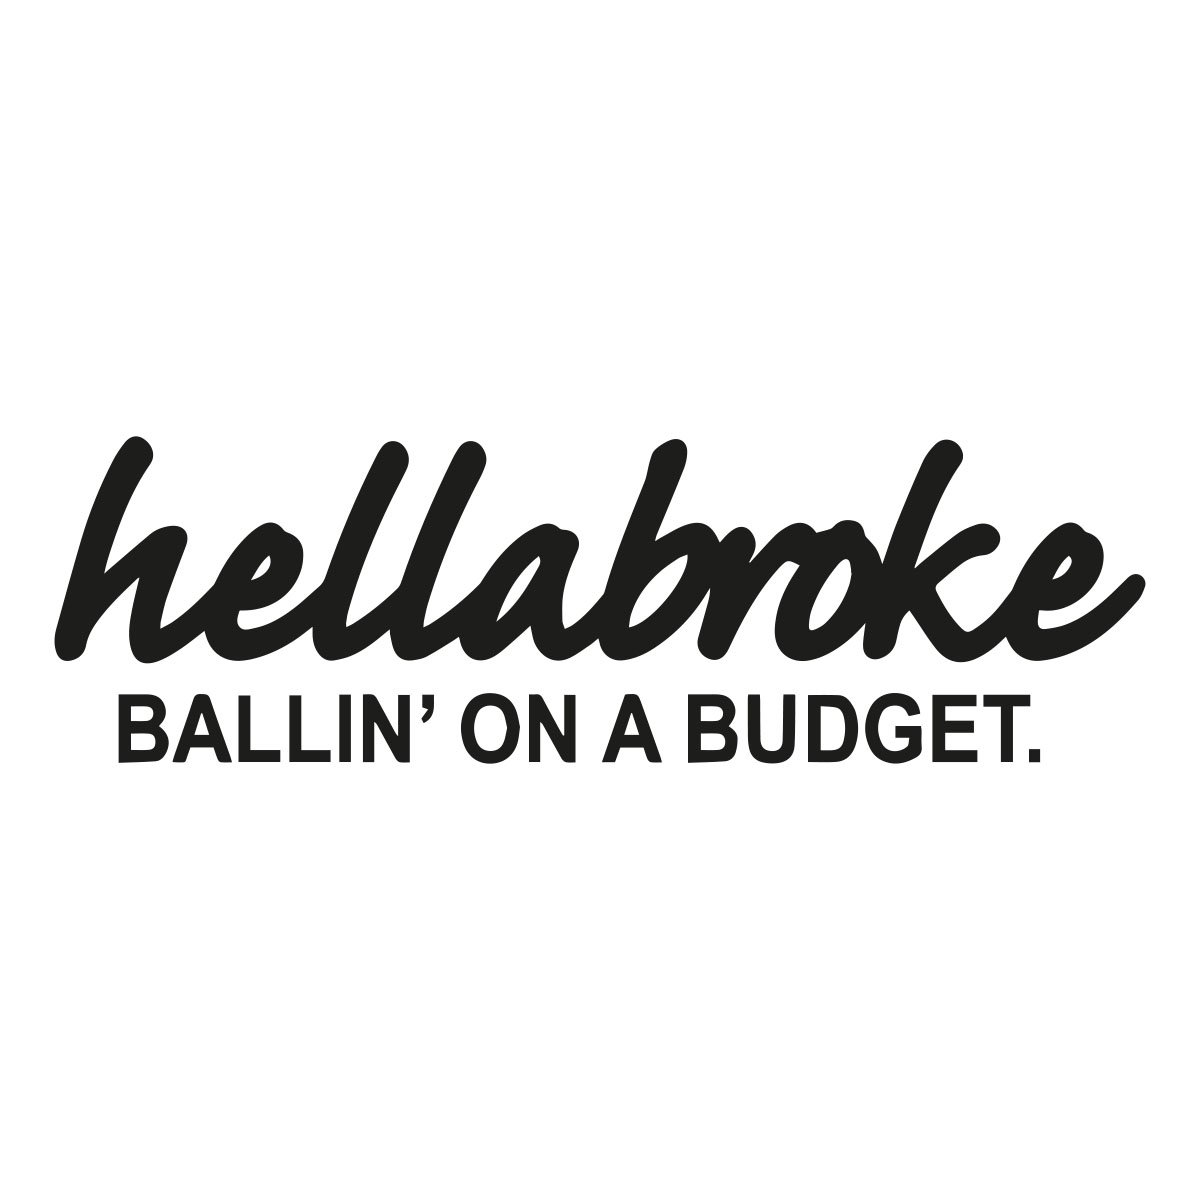 hellabroke ballin on a budget